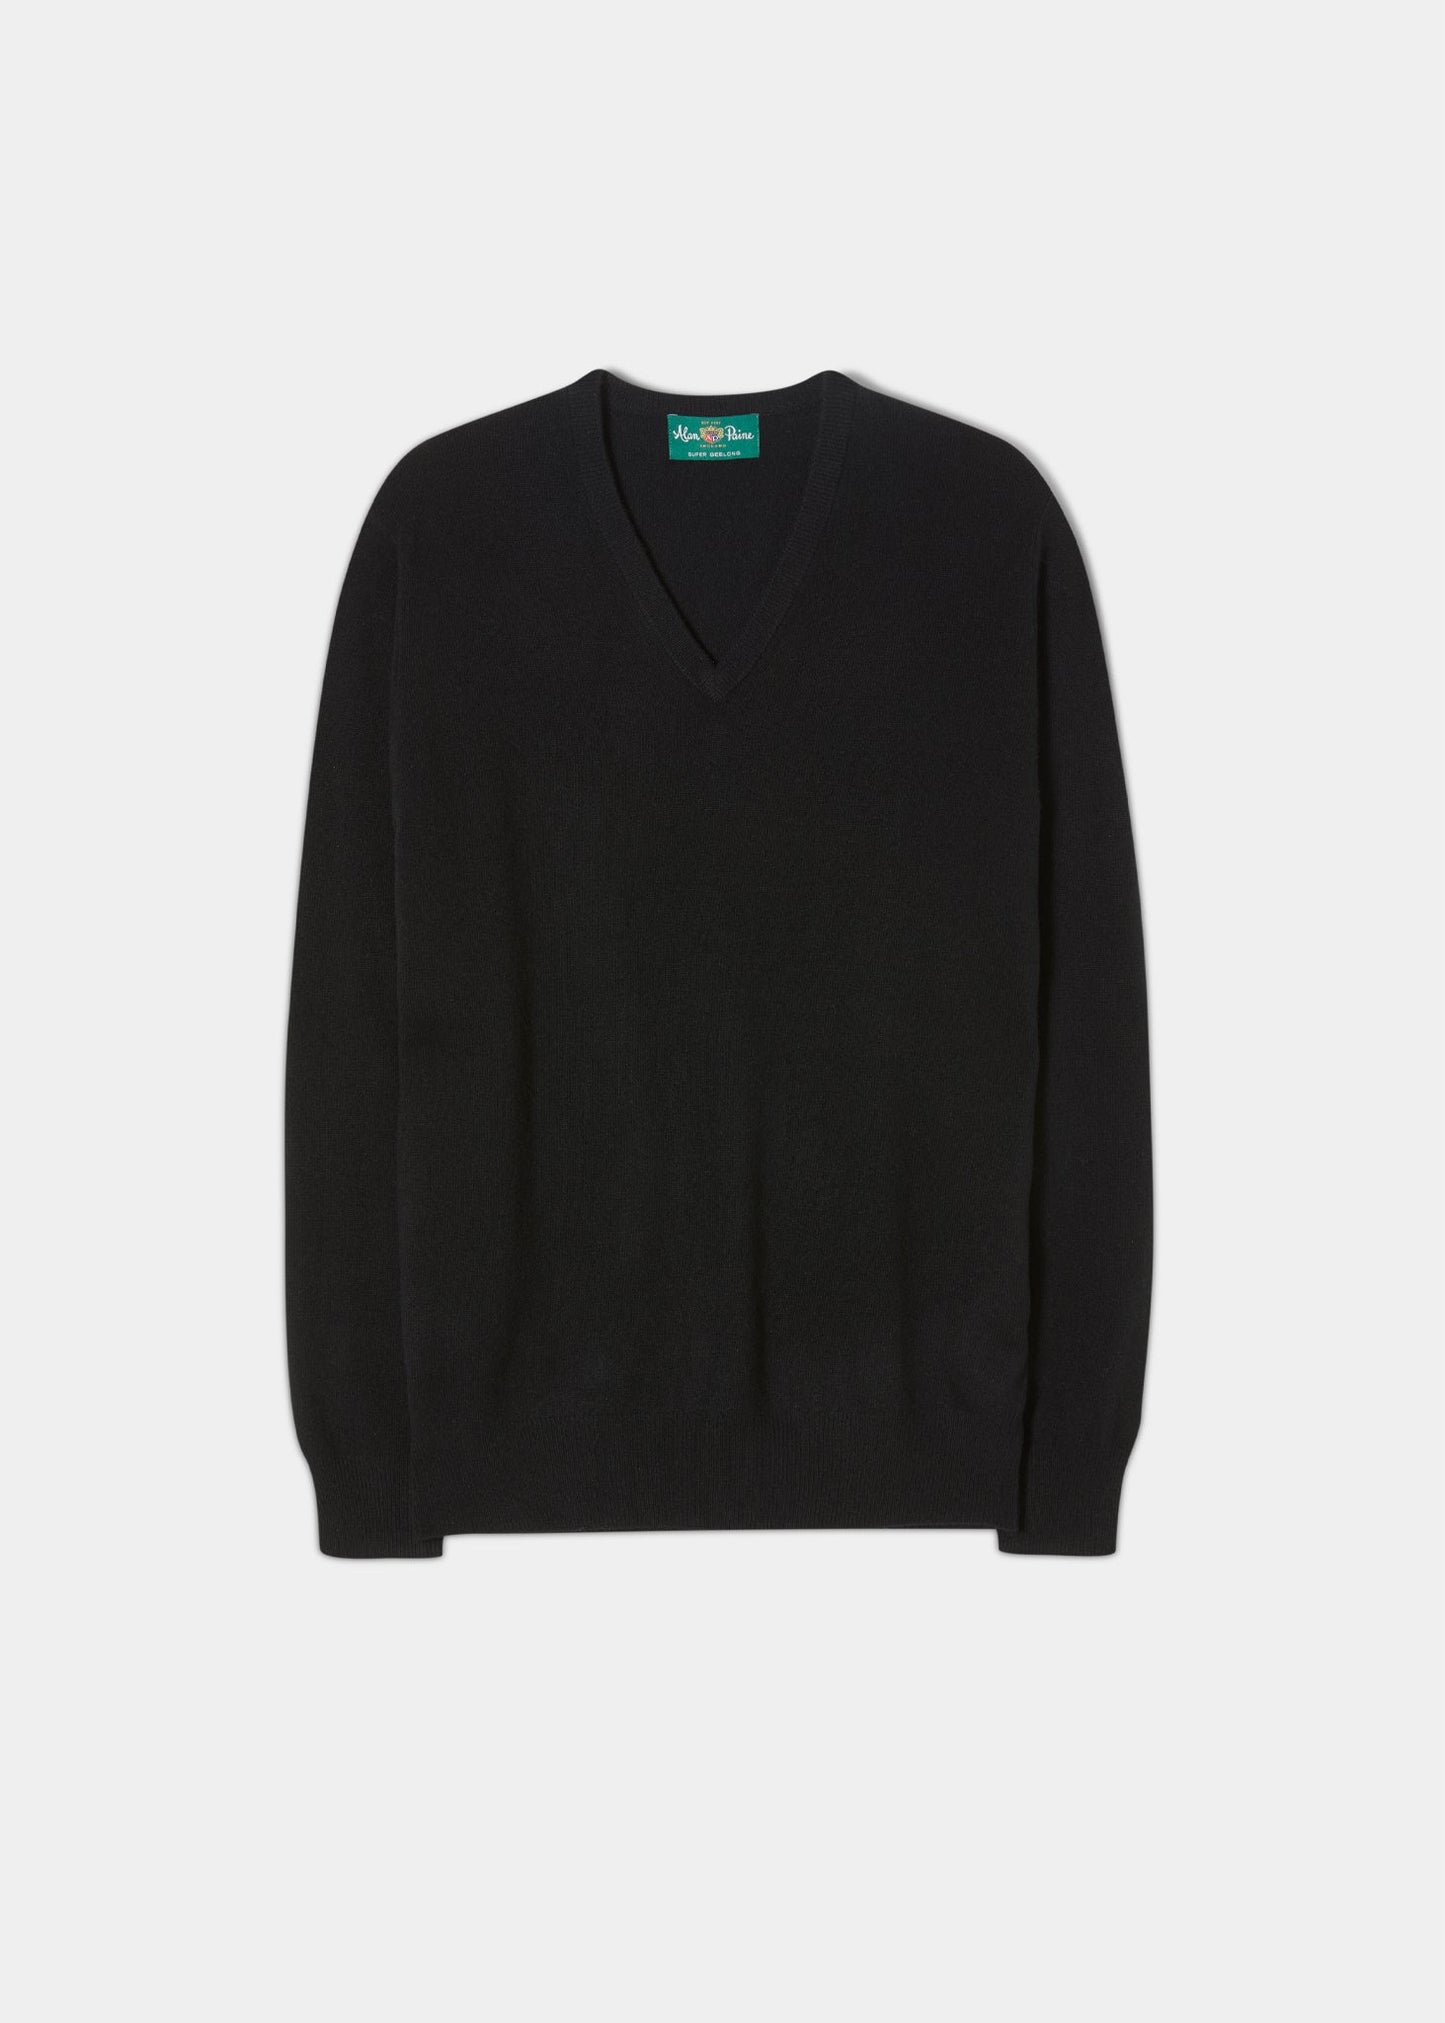 Geelong wool V neck jumper in black. 